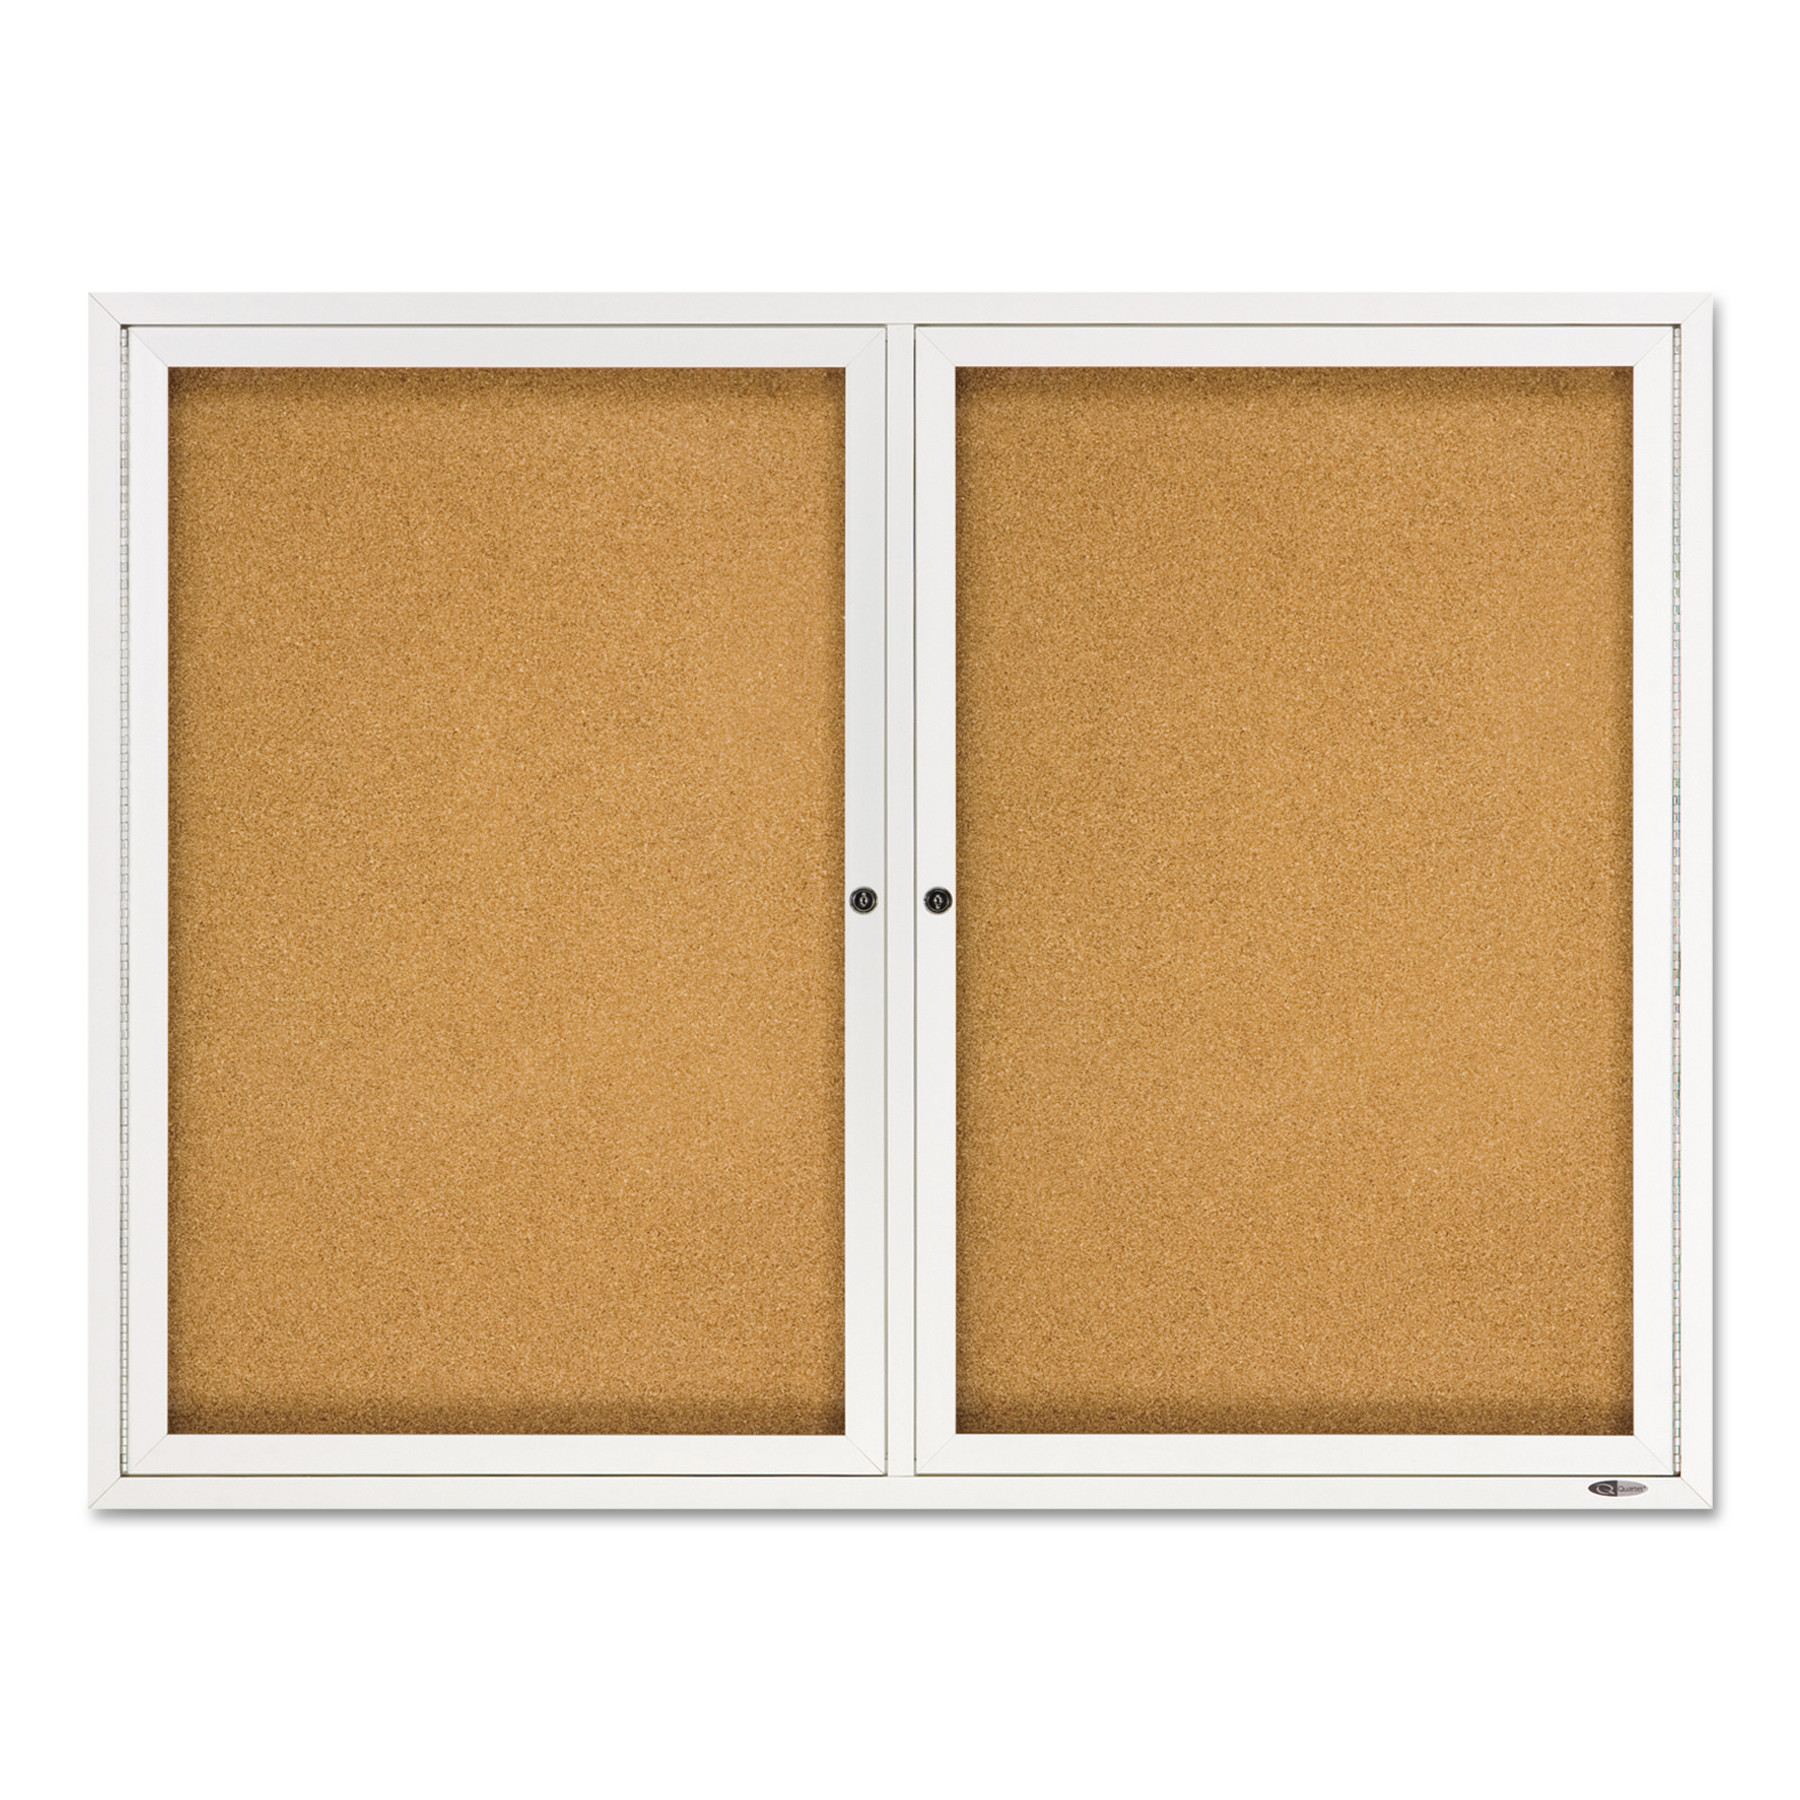  Quartet 2364 Enclosed Bulletin Board, Natural Cork/Fiberboard, 48 x 36, Silver Aluminum Frame (QRT2364) 